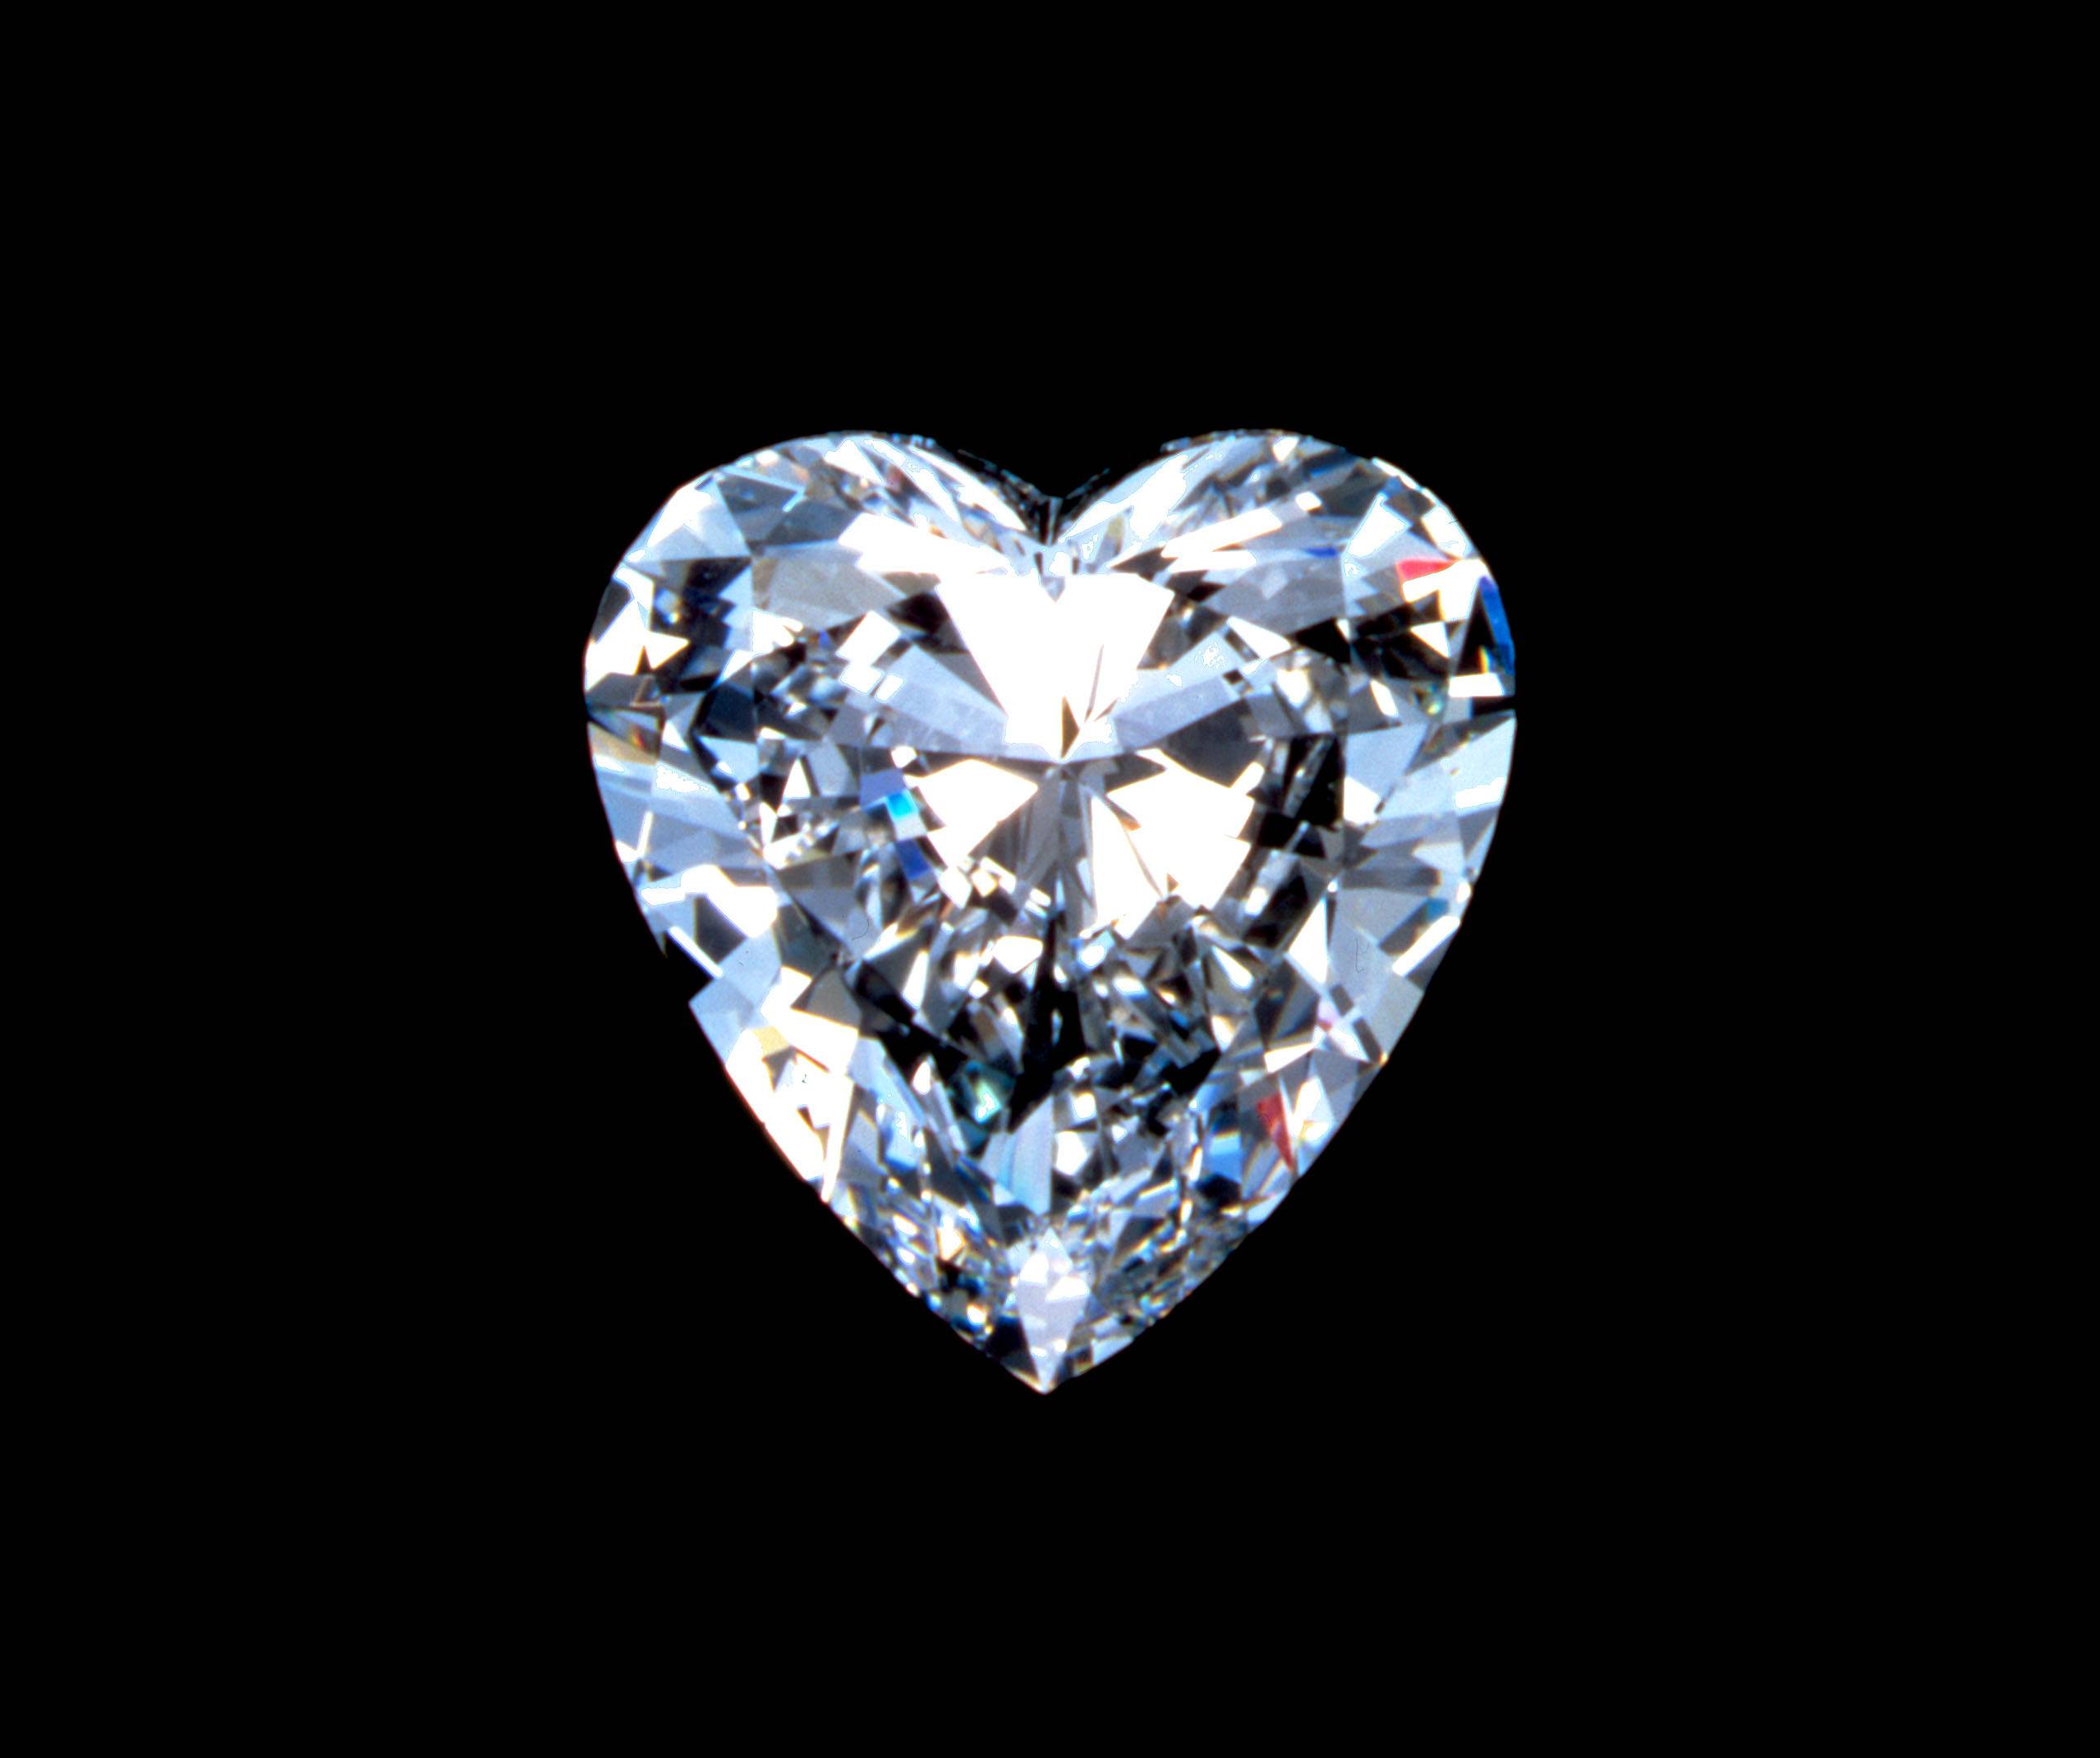 Heart Shaped Diamond   diamonds Picture 2557x2140